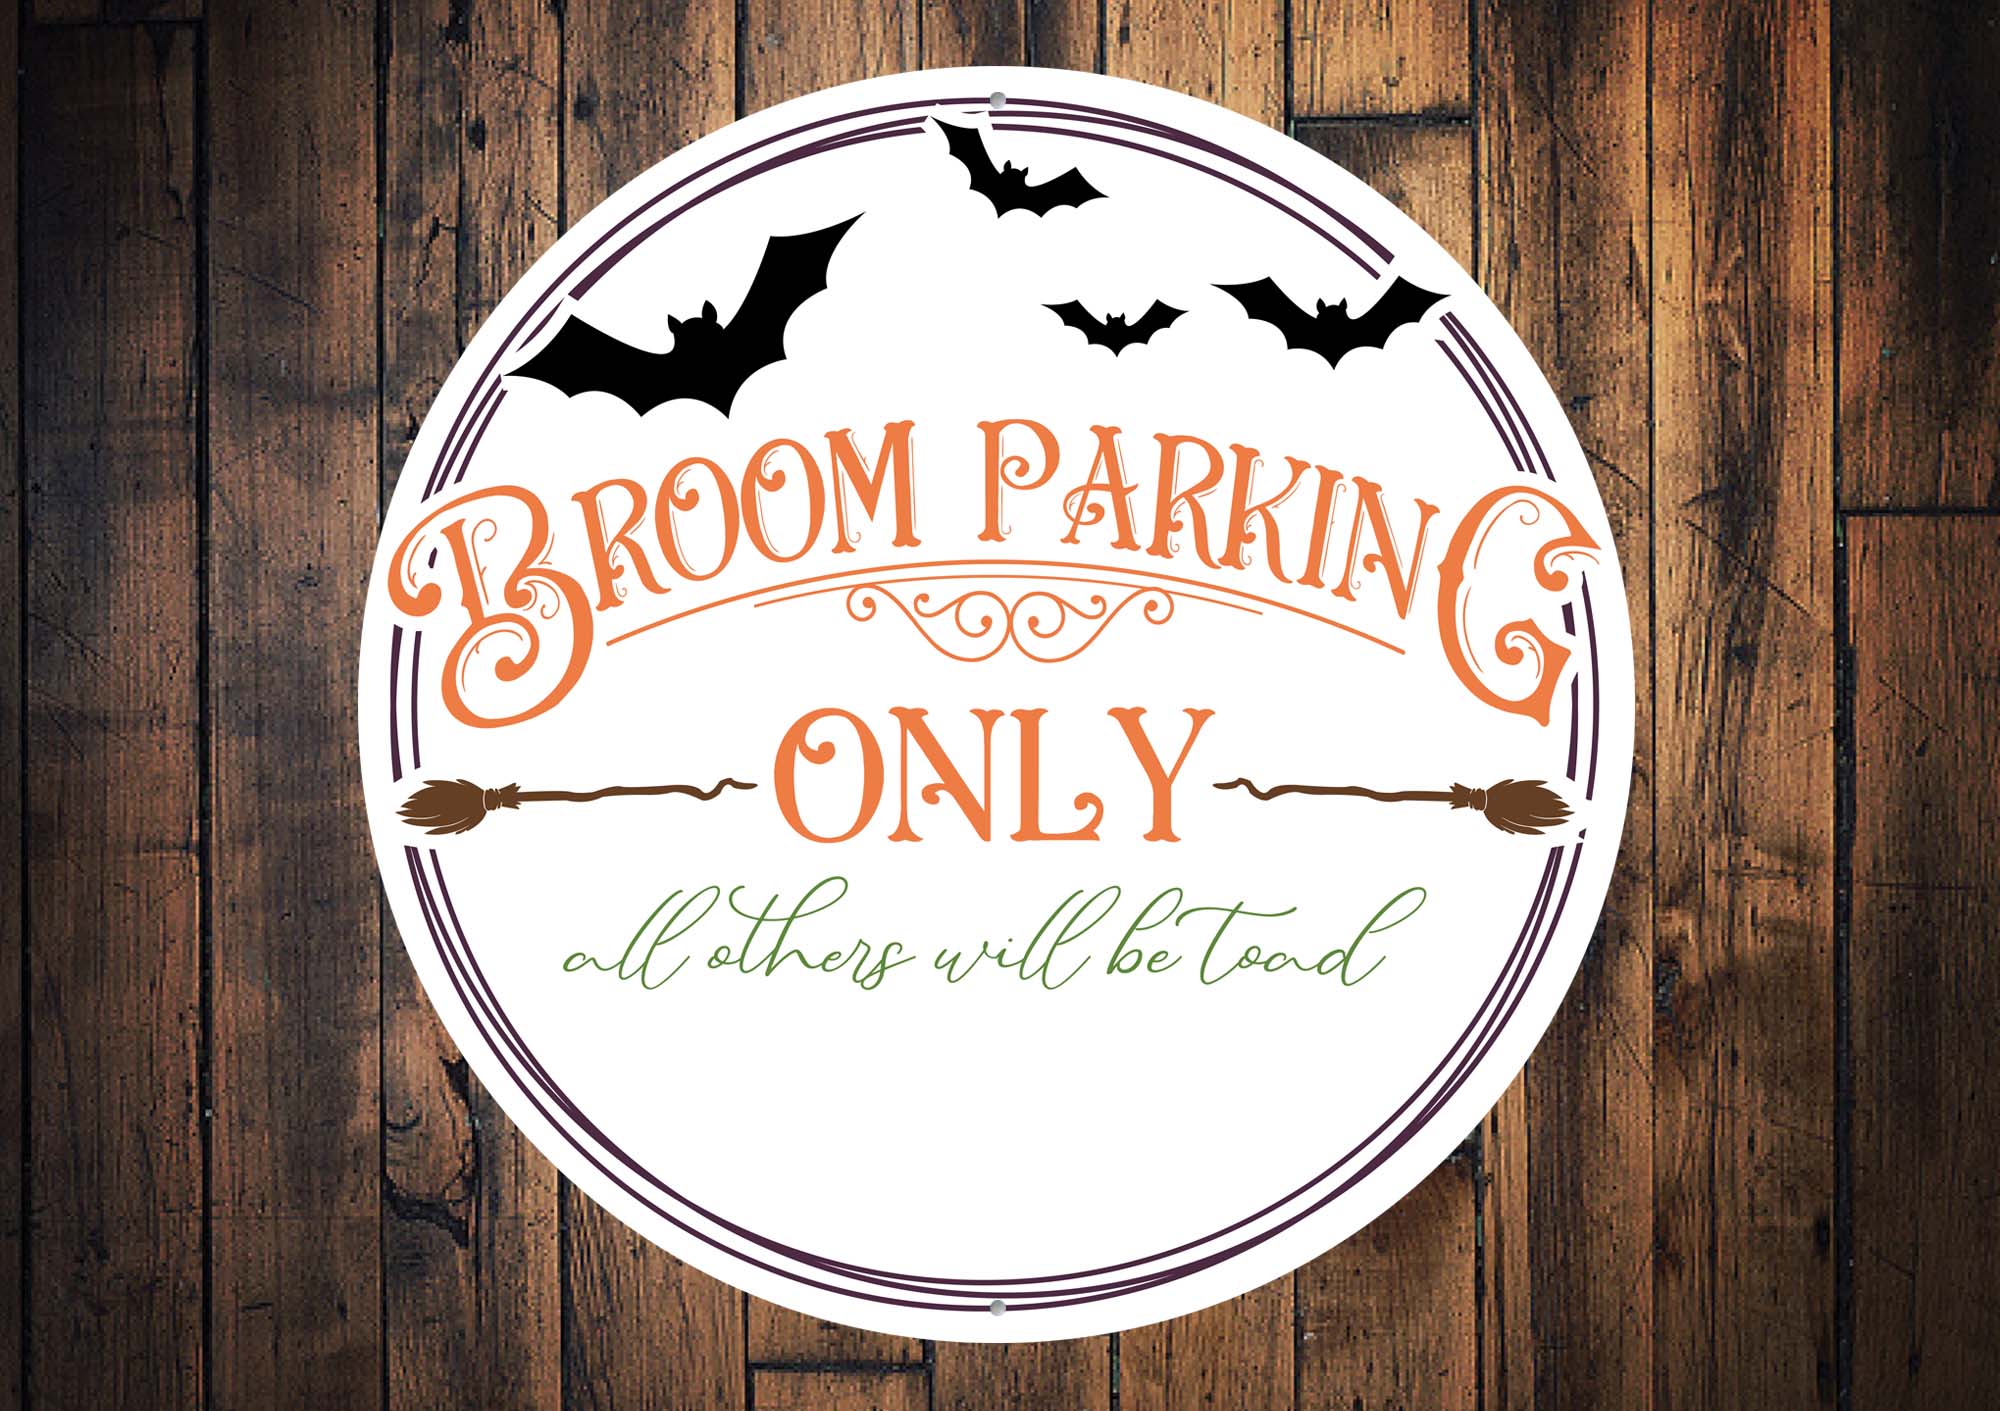 Broom Parking Only Halloween Bats Sign